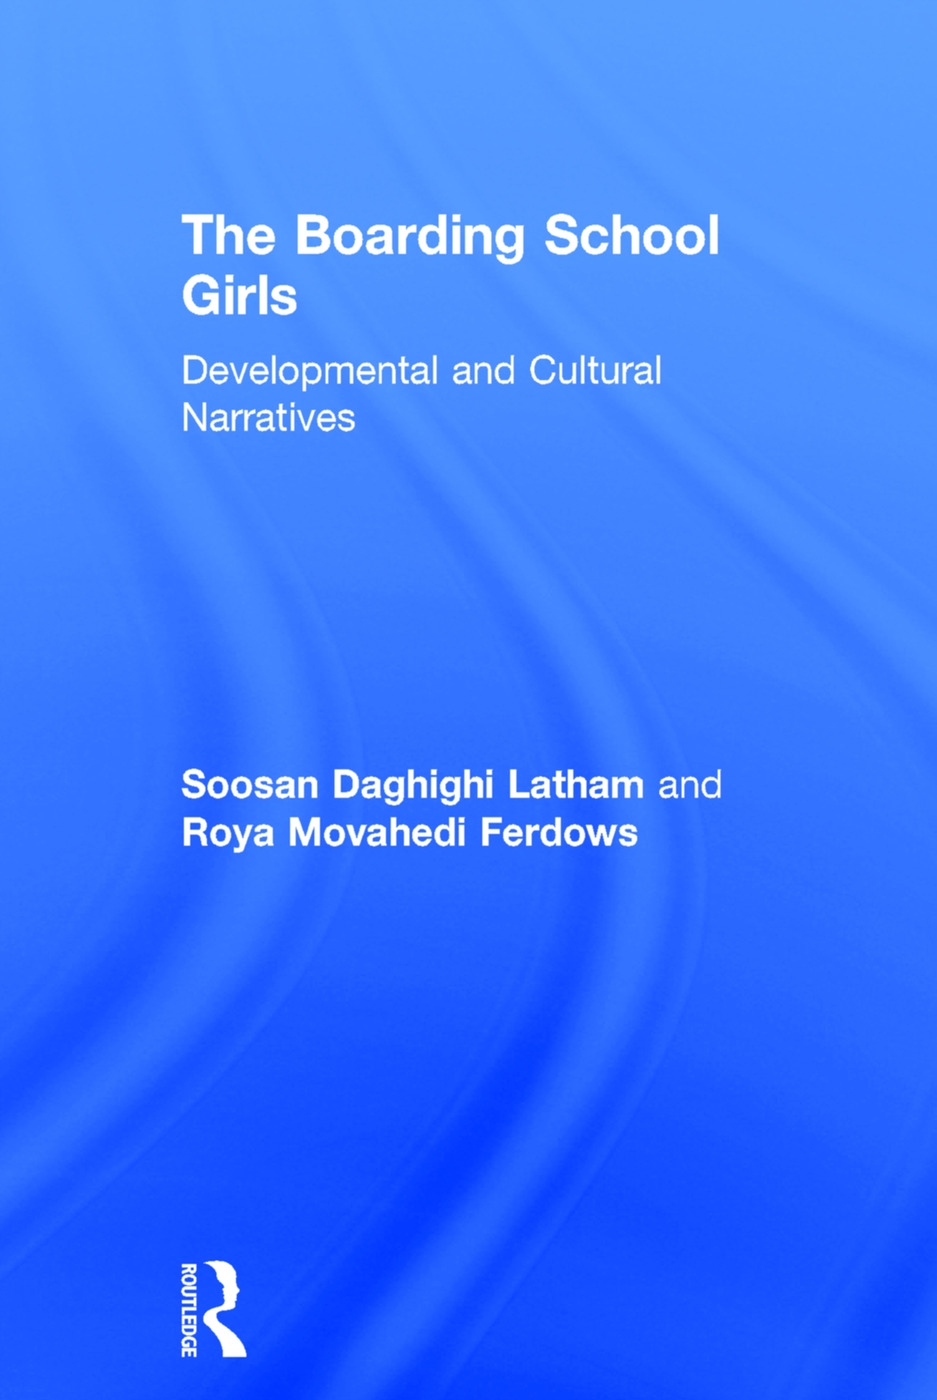 The Boarding School Girls: Developmental and Cultural Narratives